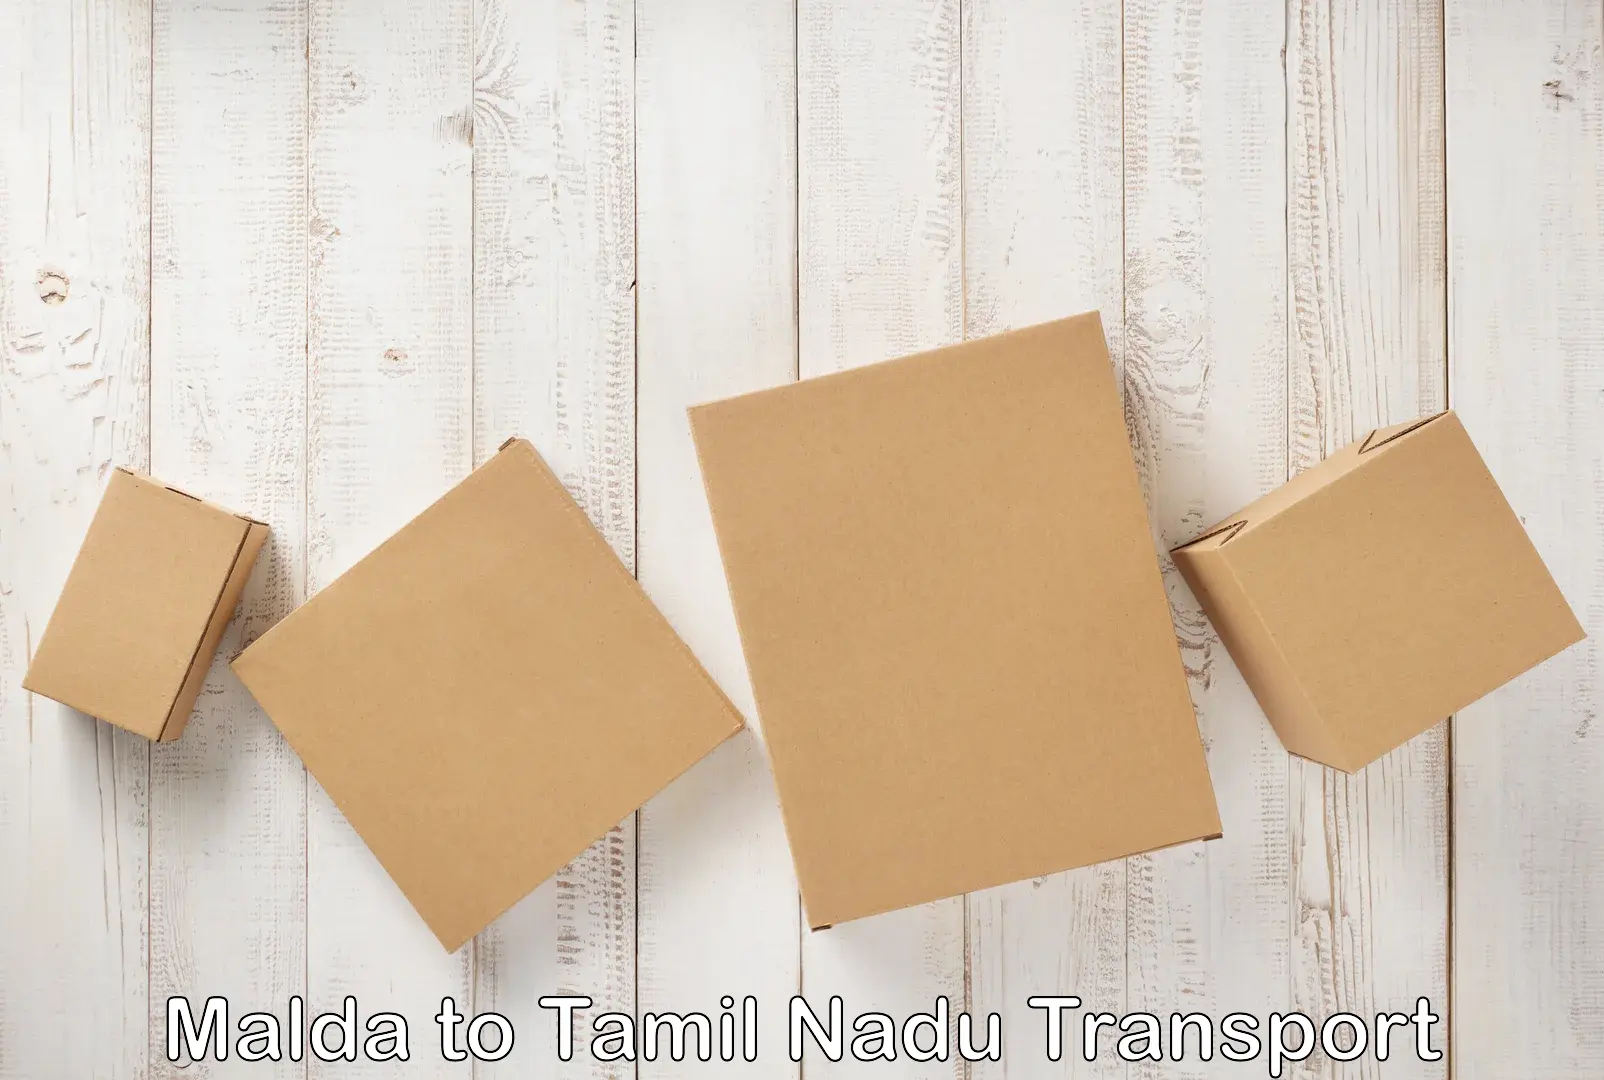 Truck transport companies in India Malda to Tamil Nadu